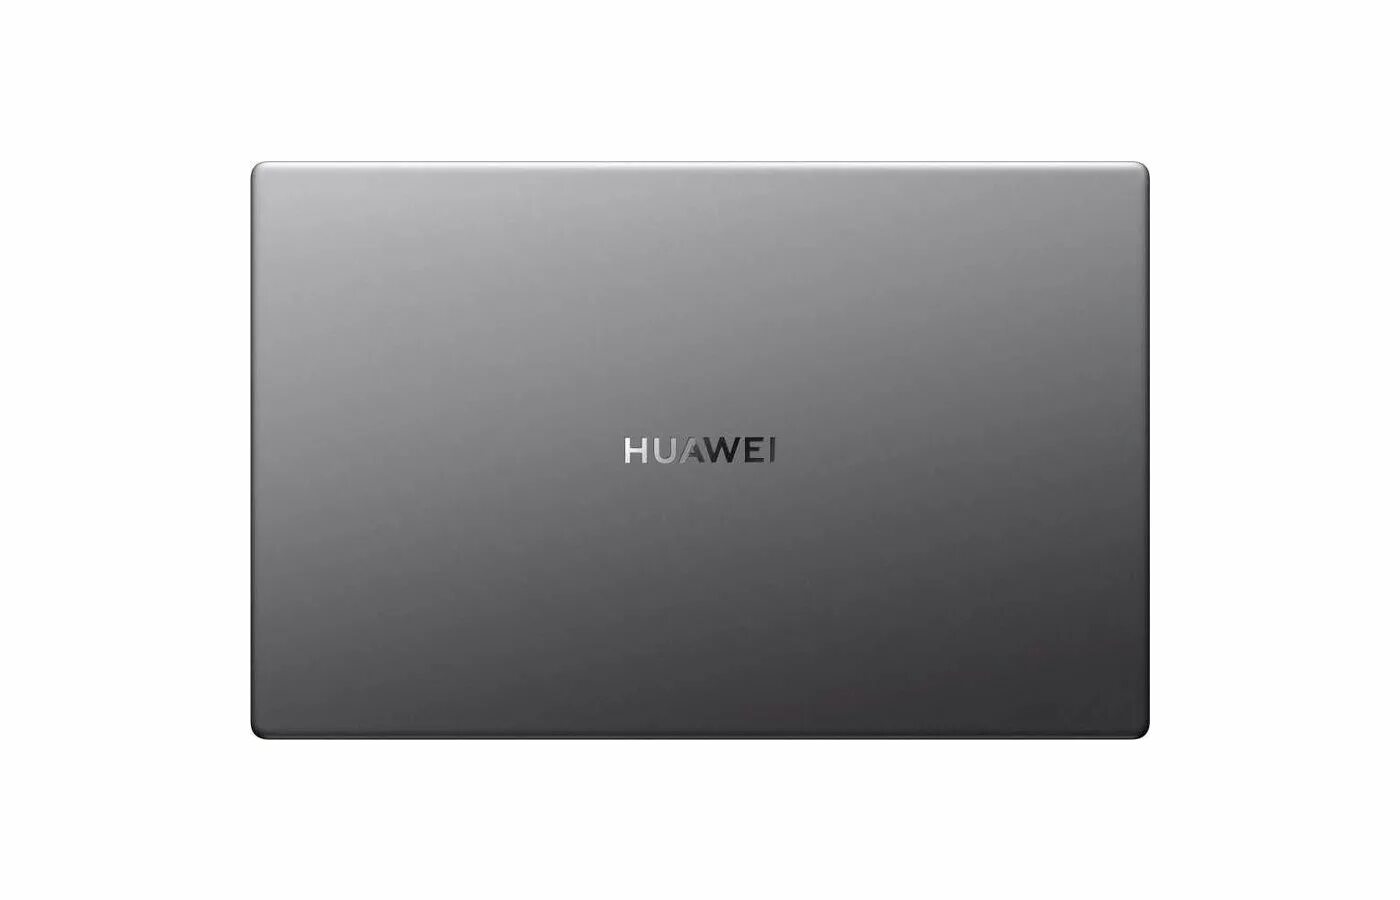 Ноутбук Huawei MATEBOOK D 15 Bob-wai9 8+256gb Mystic Silver. 14" Ноутбук Huawei MATEBOOK D 14nbb-wai9. 15.6" Ноутбук Huawei MATEBOOK D. Ноутбук Huawei 53013plu NBD-wdi9 MATEBOOK d14. Huawei matebook d 15 ryzen 7 5700u